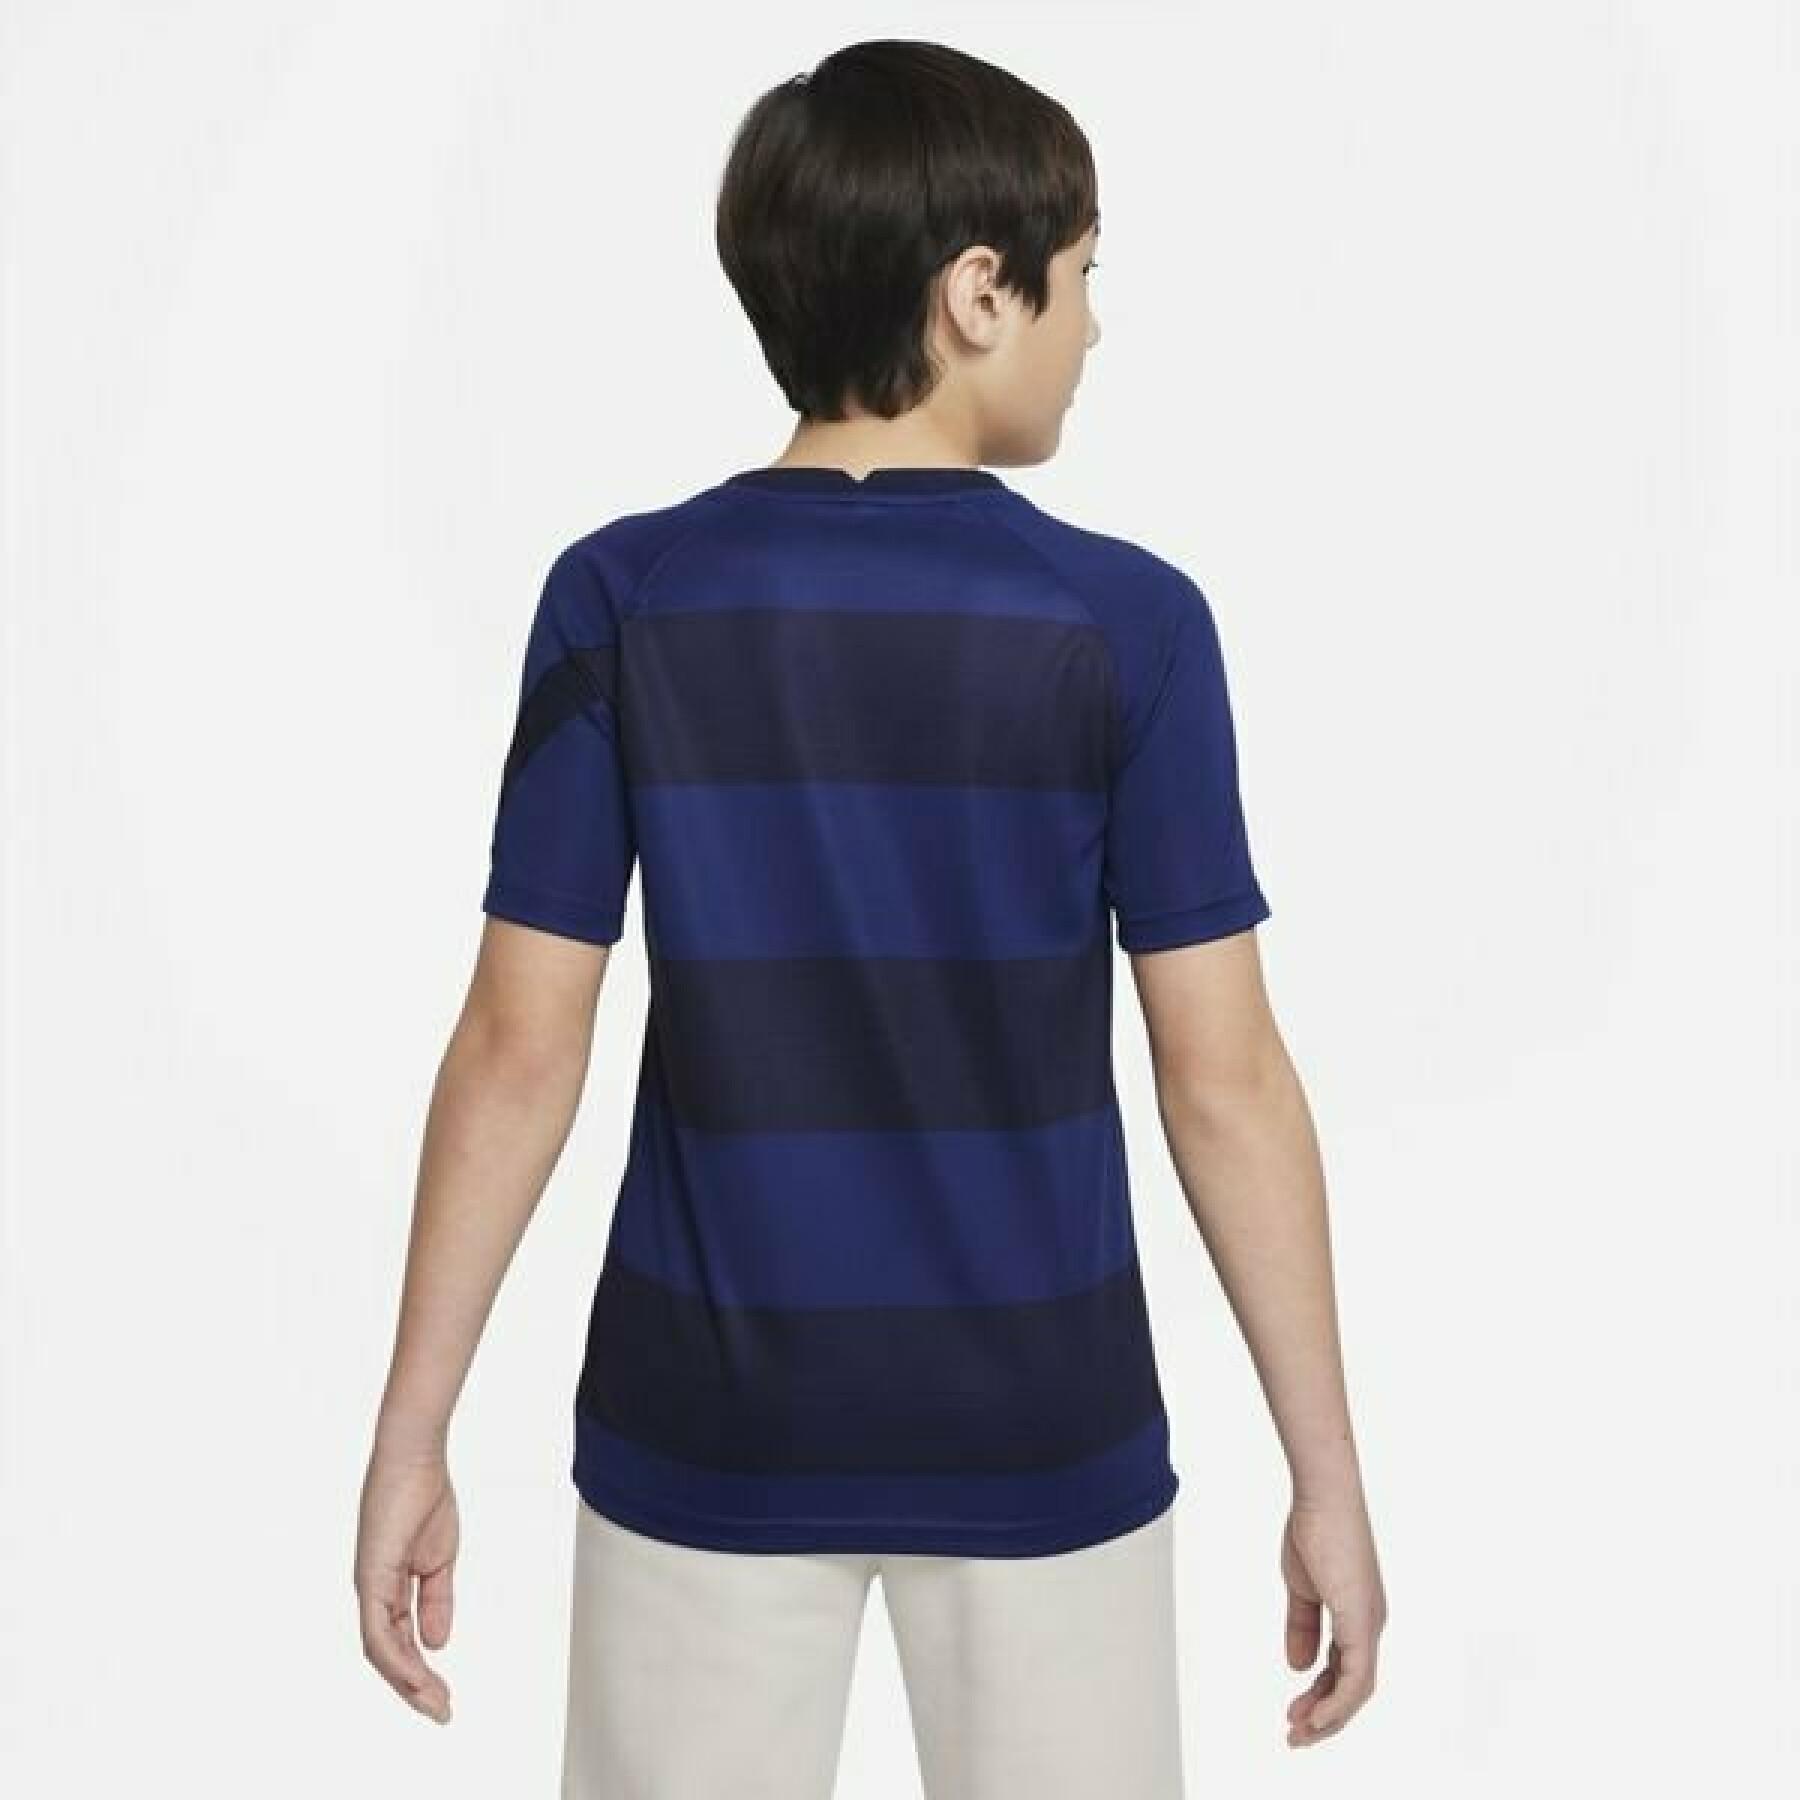 Child's T-shirt Chelsea 2021/22 Dri-FIT